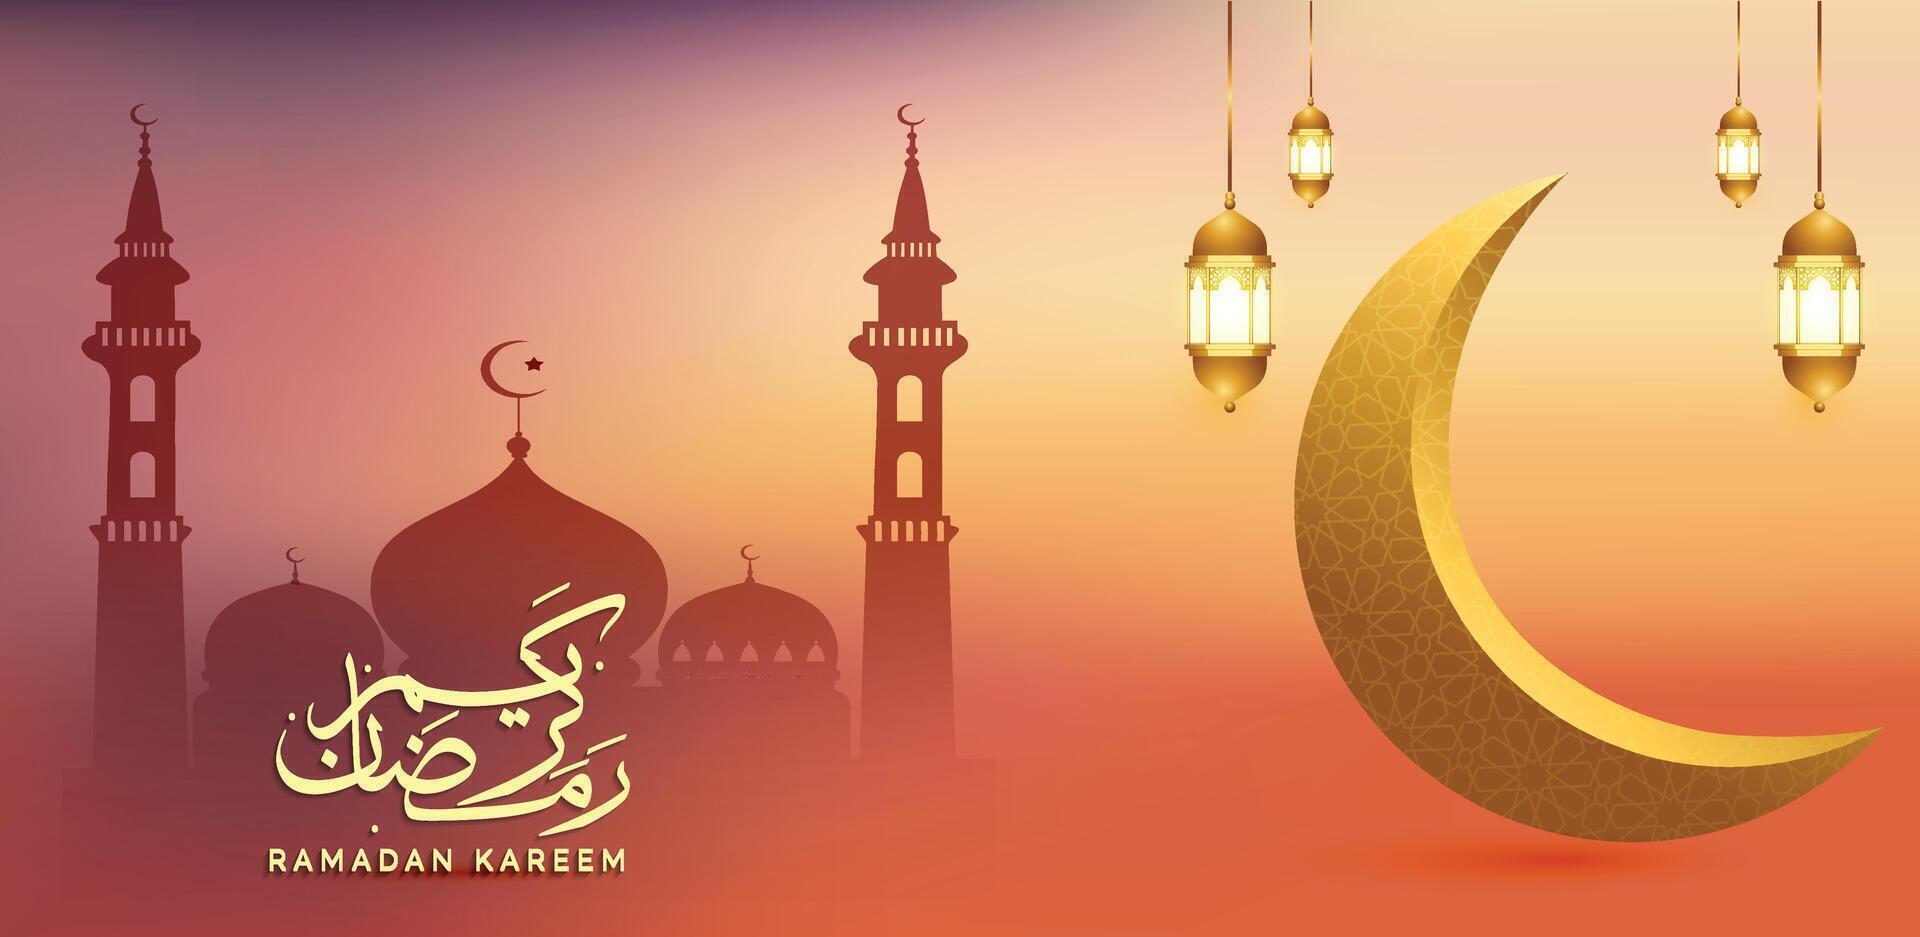 Ramadan Kareem Background with moon and lantern ornament vector